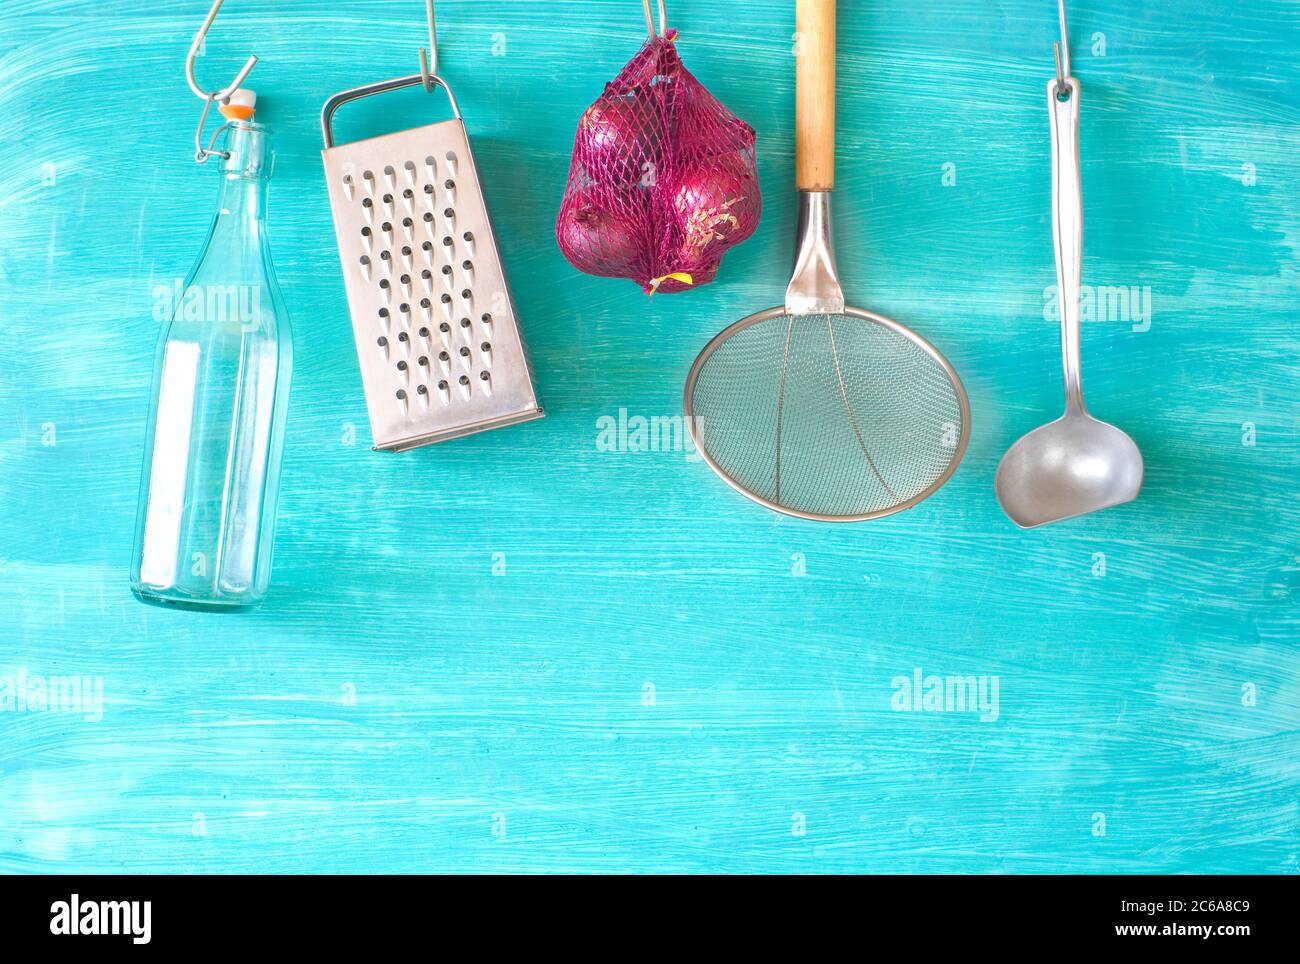 Utensili da cucina appesi per cucina commerciale, ristorante, cucina, cucina concetto. Foto Stock